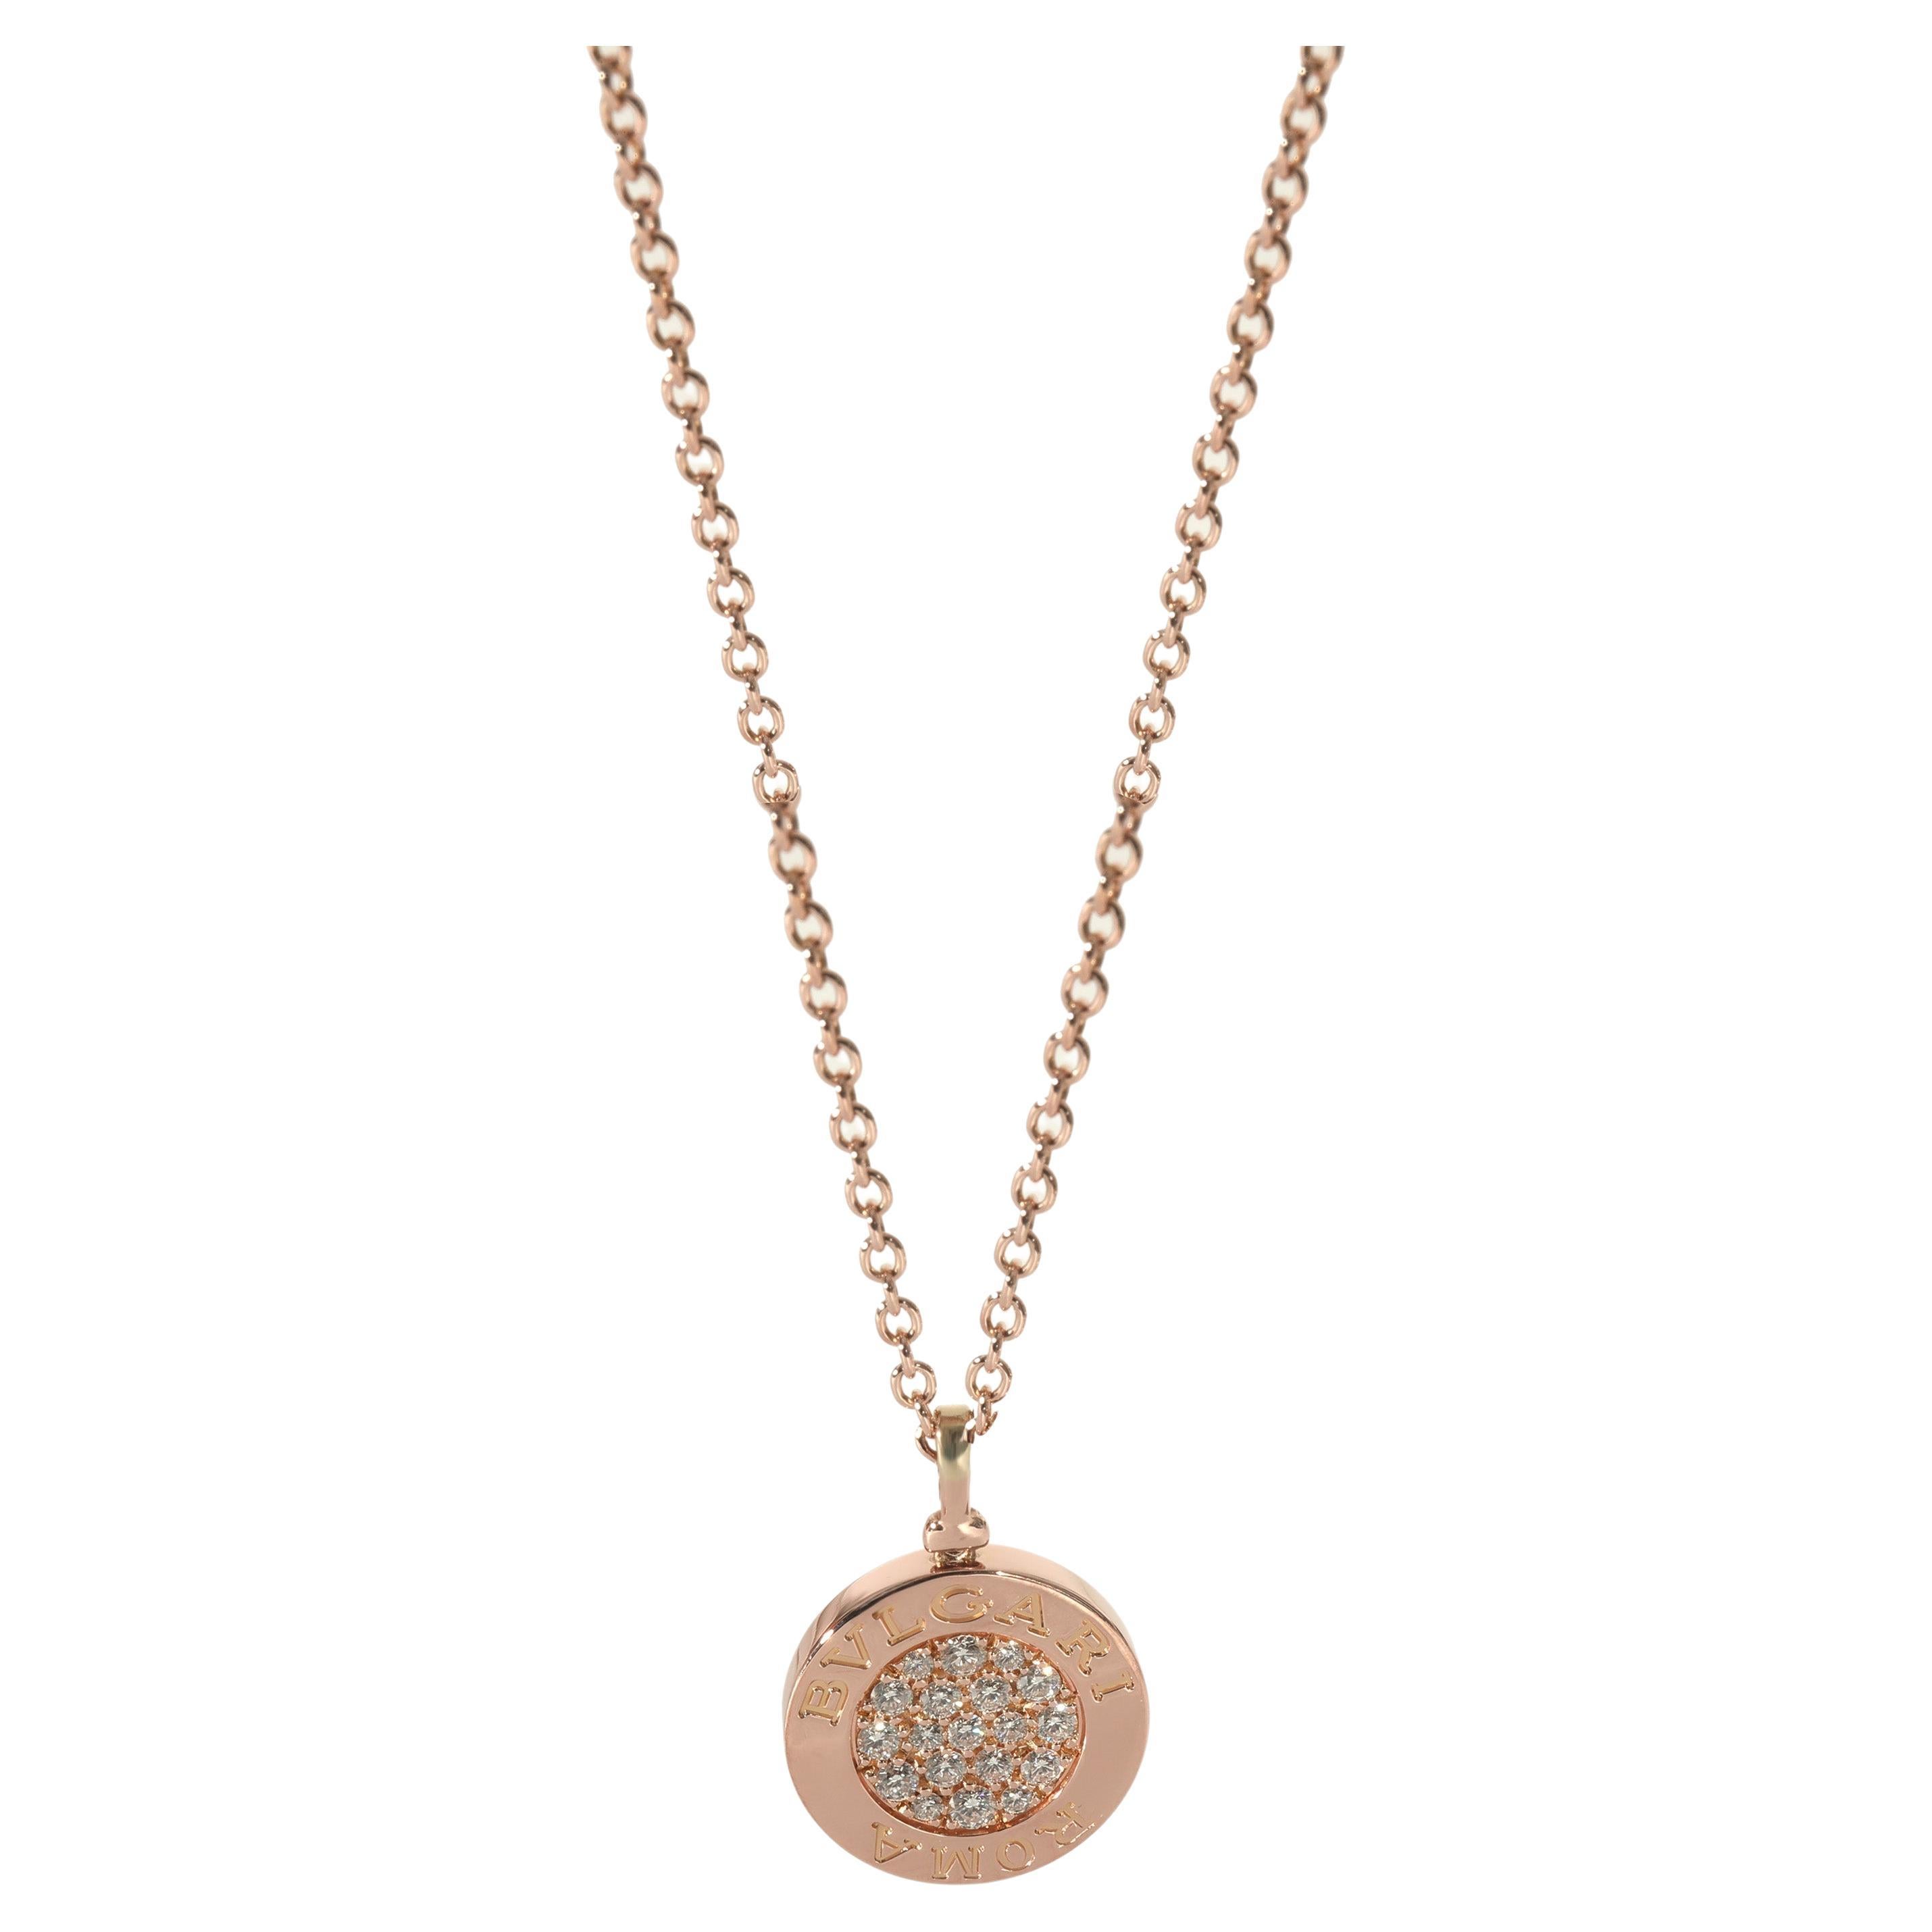 Bvlgari Bvlgari Diamond Necklace in 18k Rose Gold 0.34 Ctw